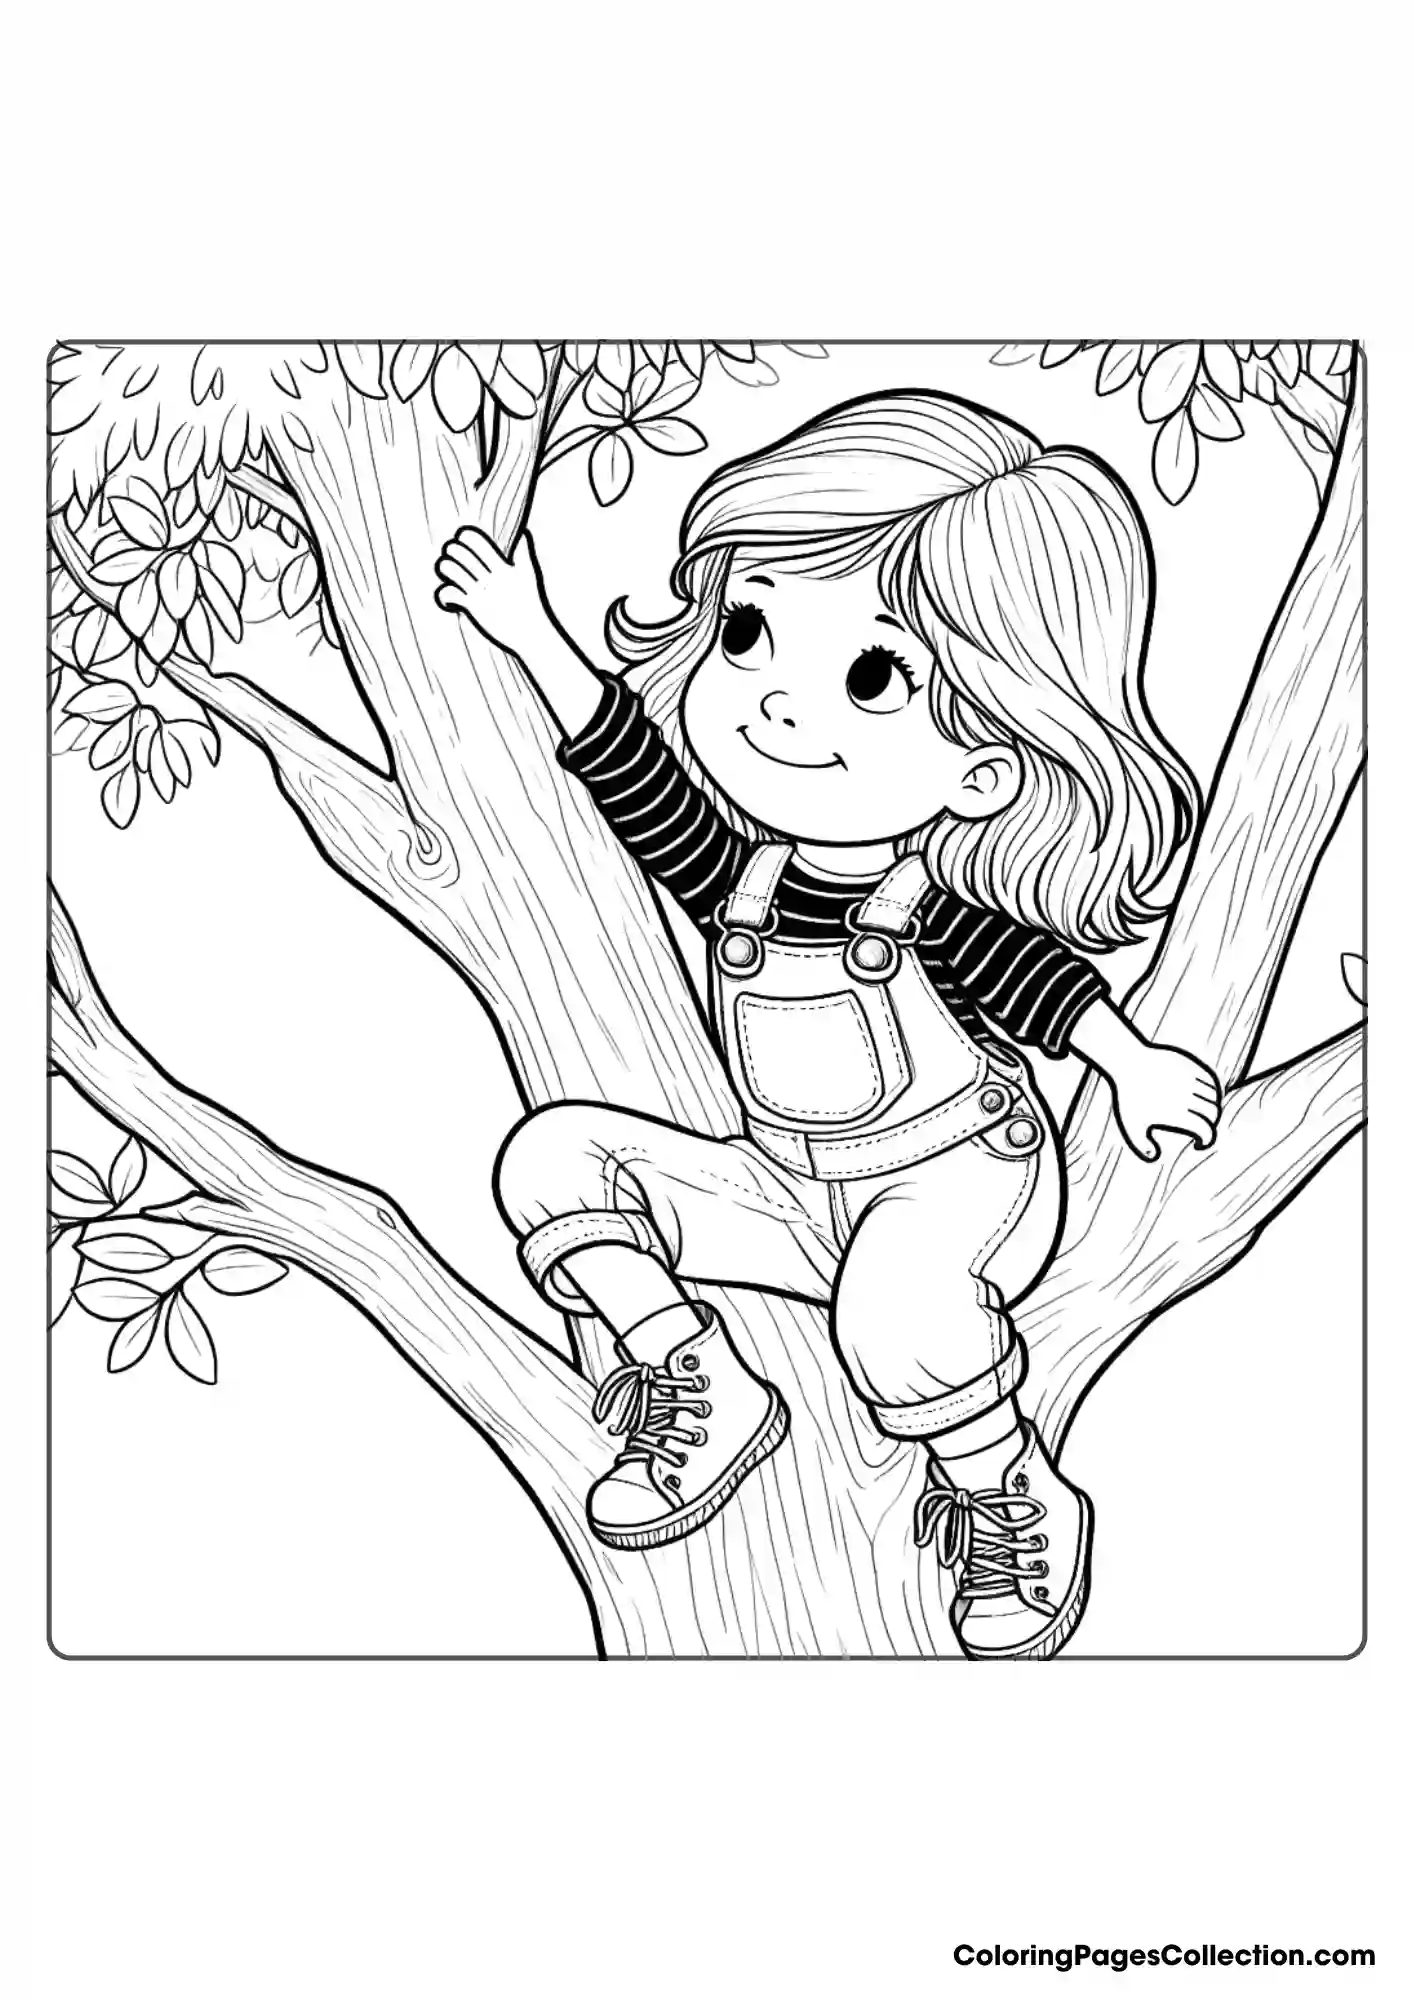 Girl Climbing A Tree